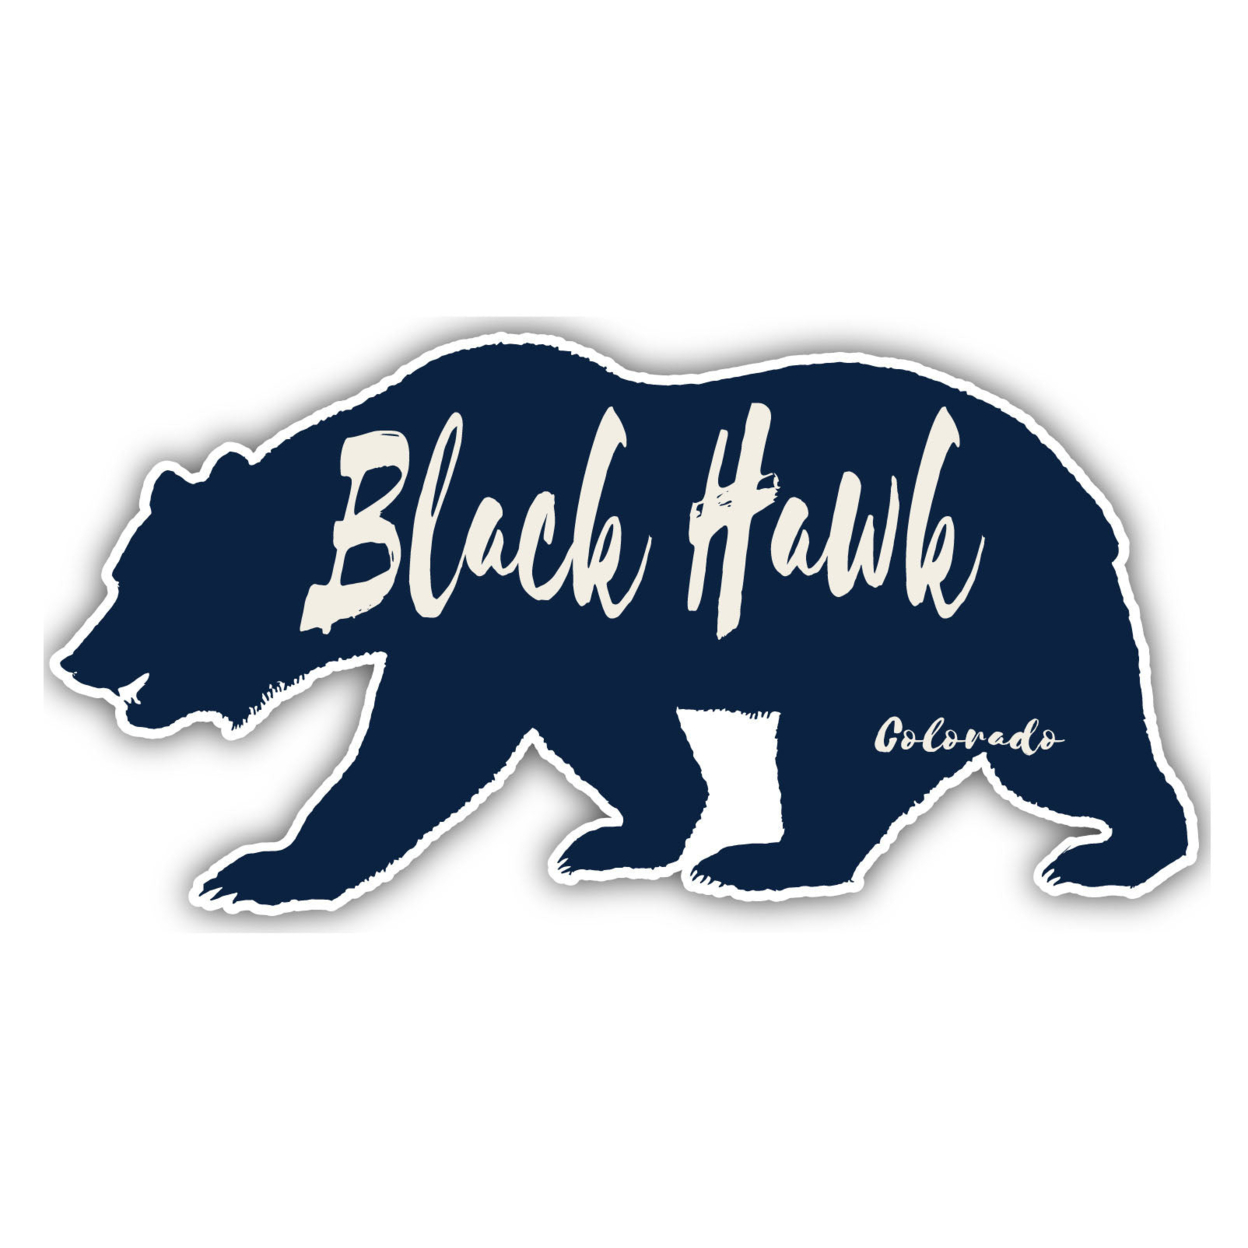 Black Hawk Colorado Souvenir Decorative Stickers (Choose Theme And Size) - 4-Pack, 8-Inch, Adventures Awaits